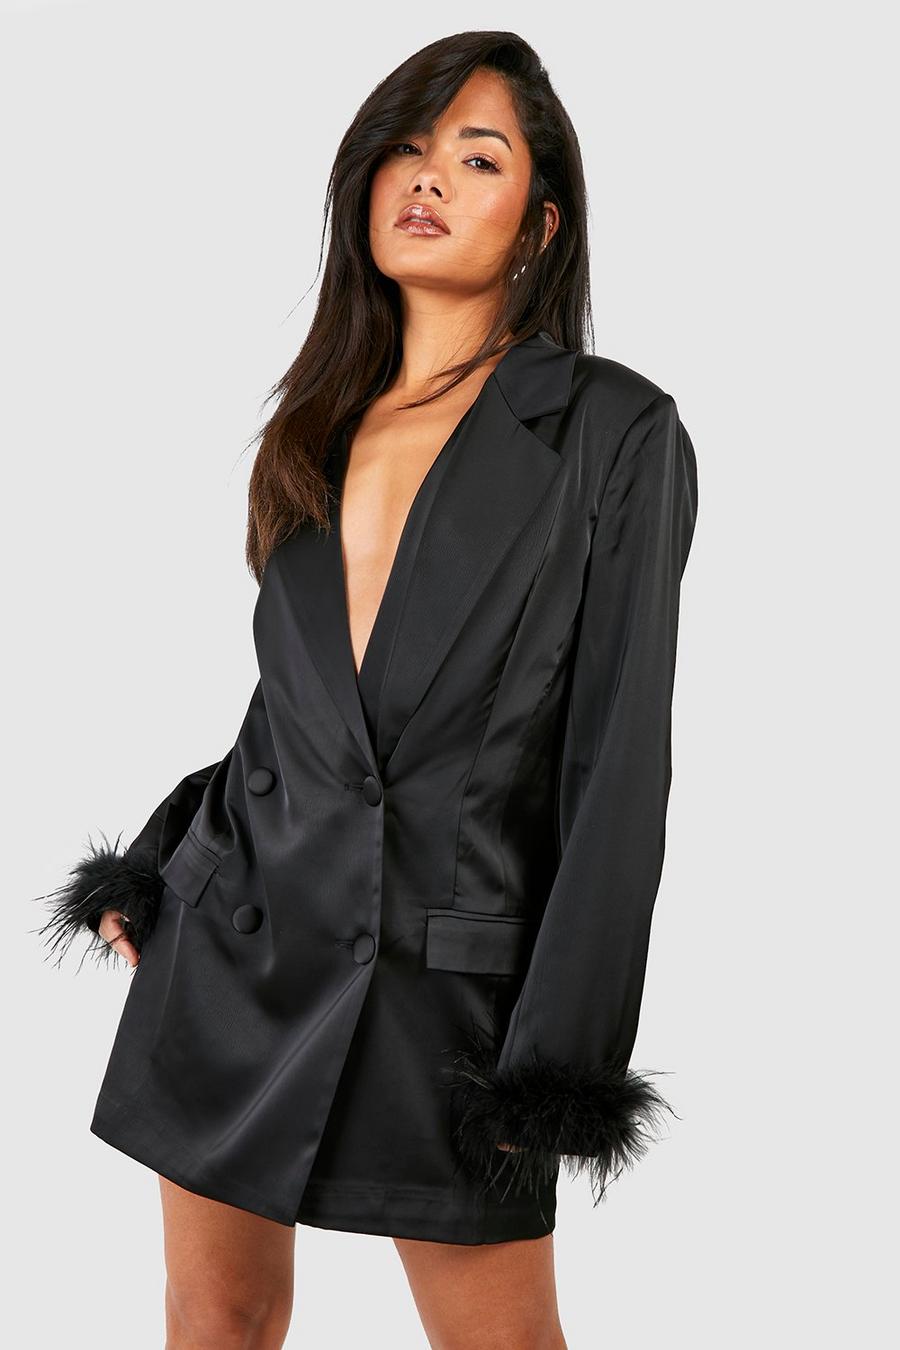 Black Matte Satin Double Breasted Feather Trim Blazer Dress